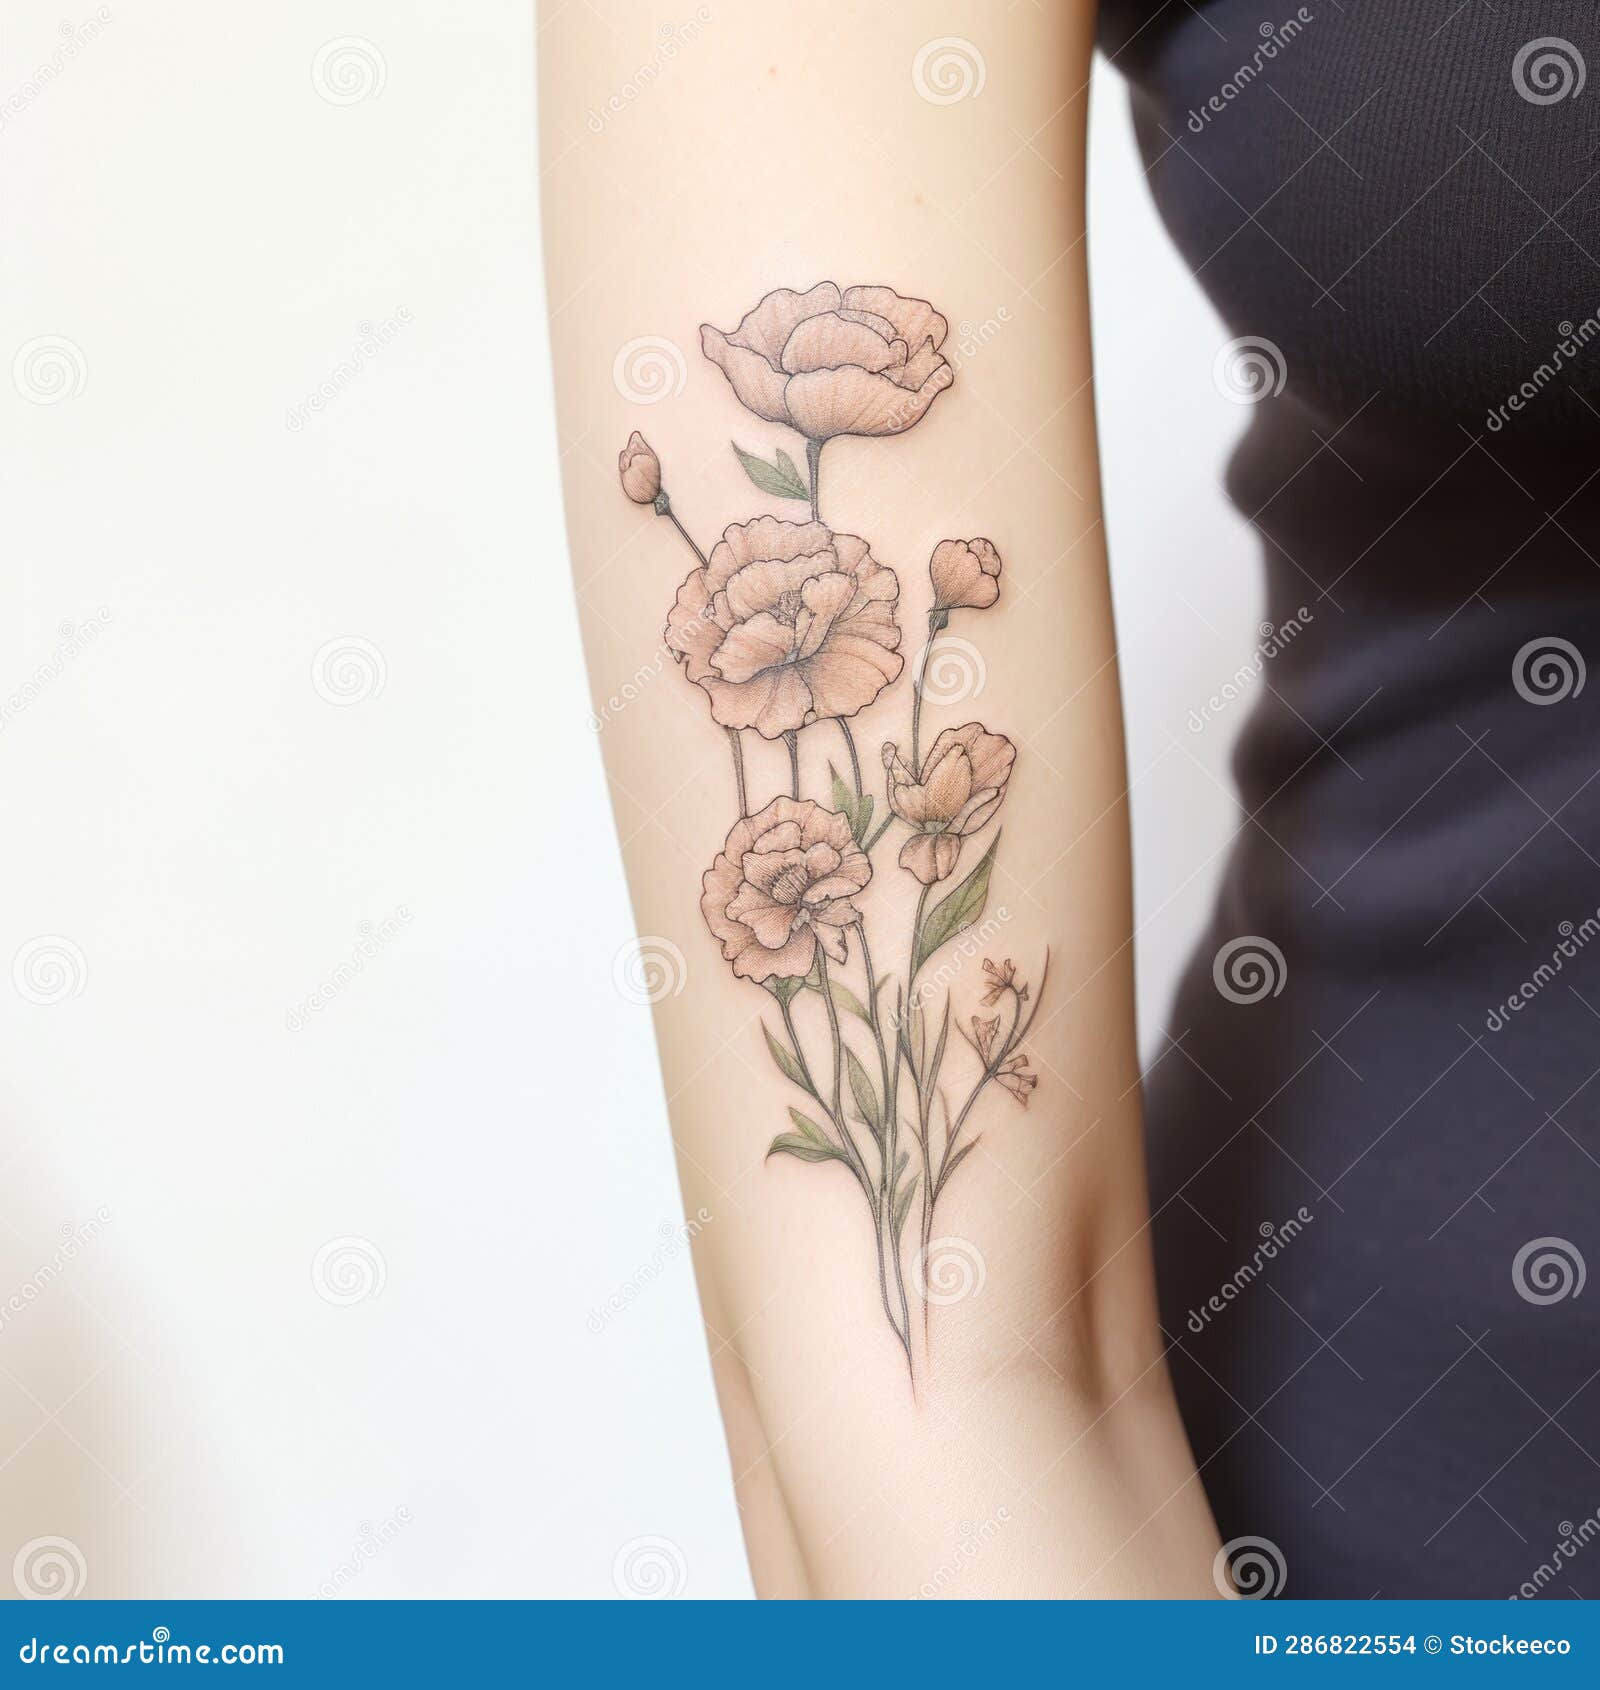 Delicate flower tattoo done in fine line.